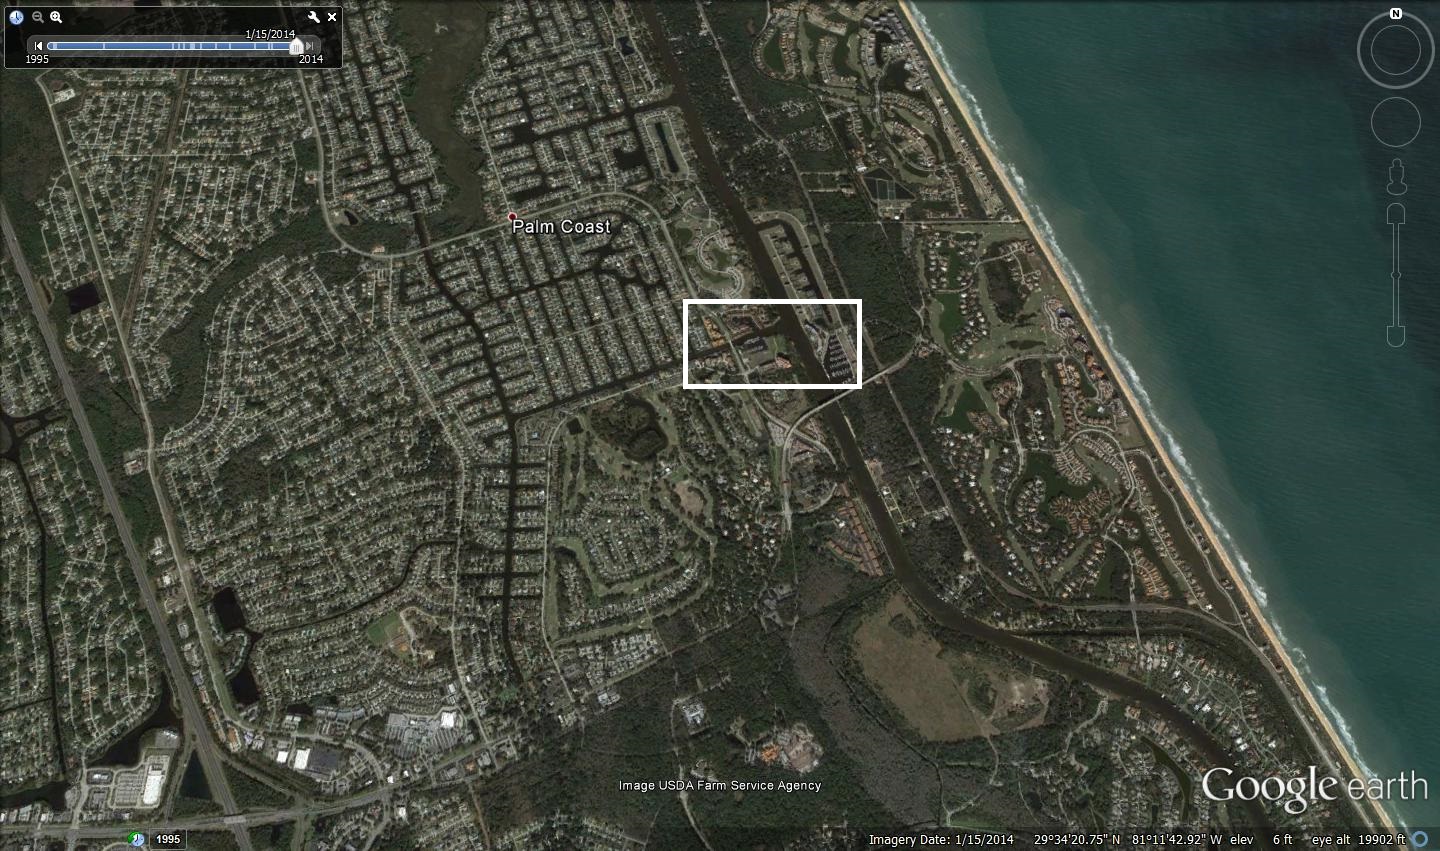 Palm Coast 'C' Section and marina